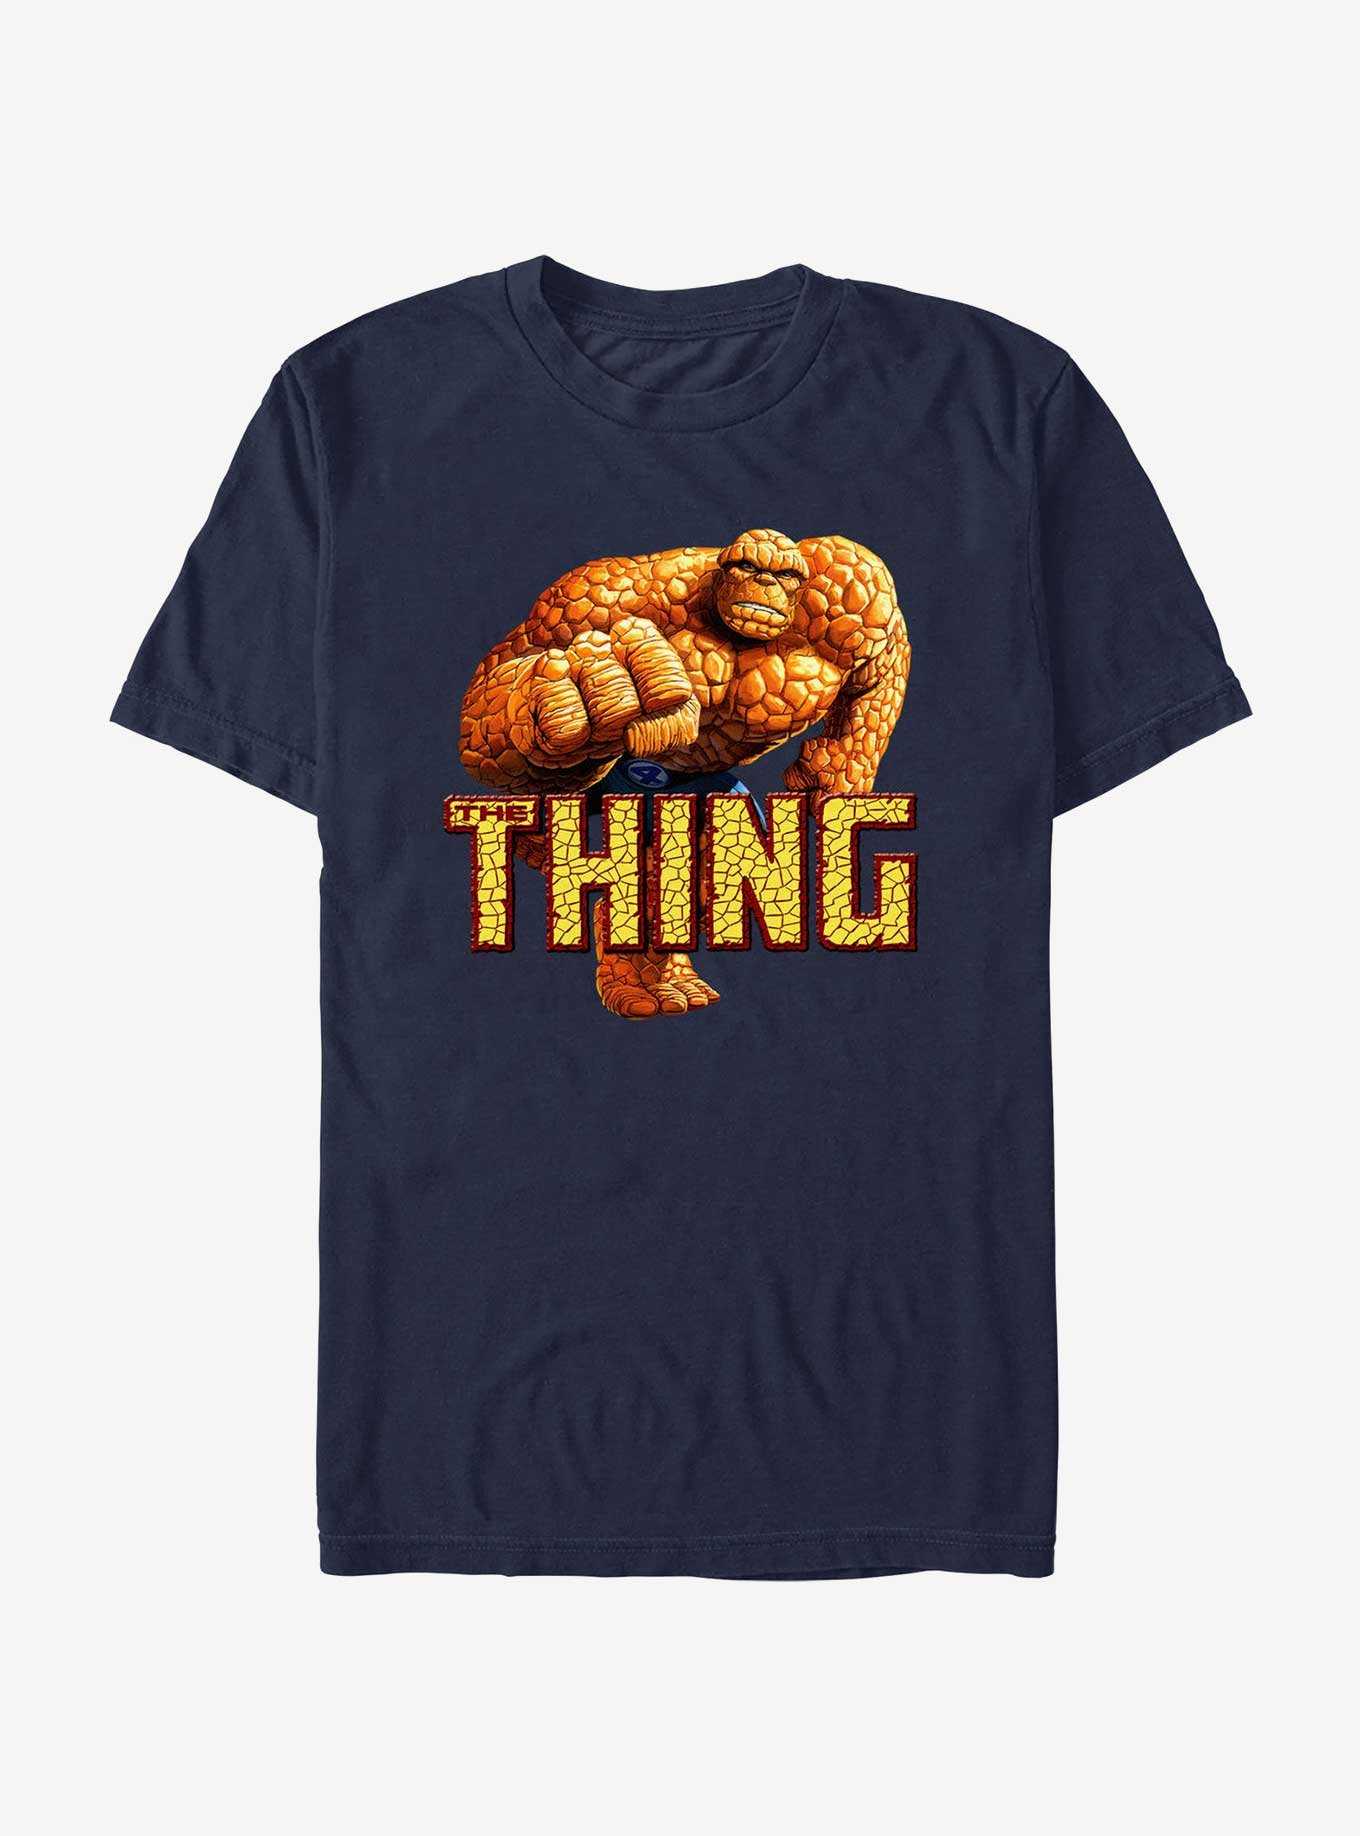 Marvel Fantastic Four G Thing T-Shirt, , hi-res